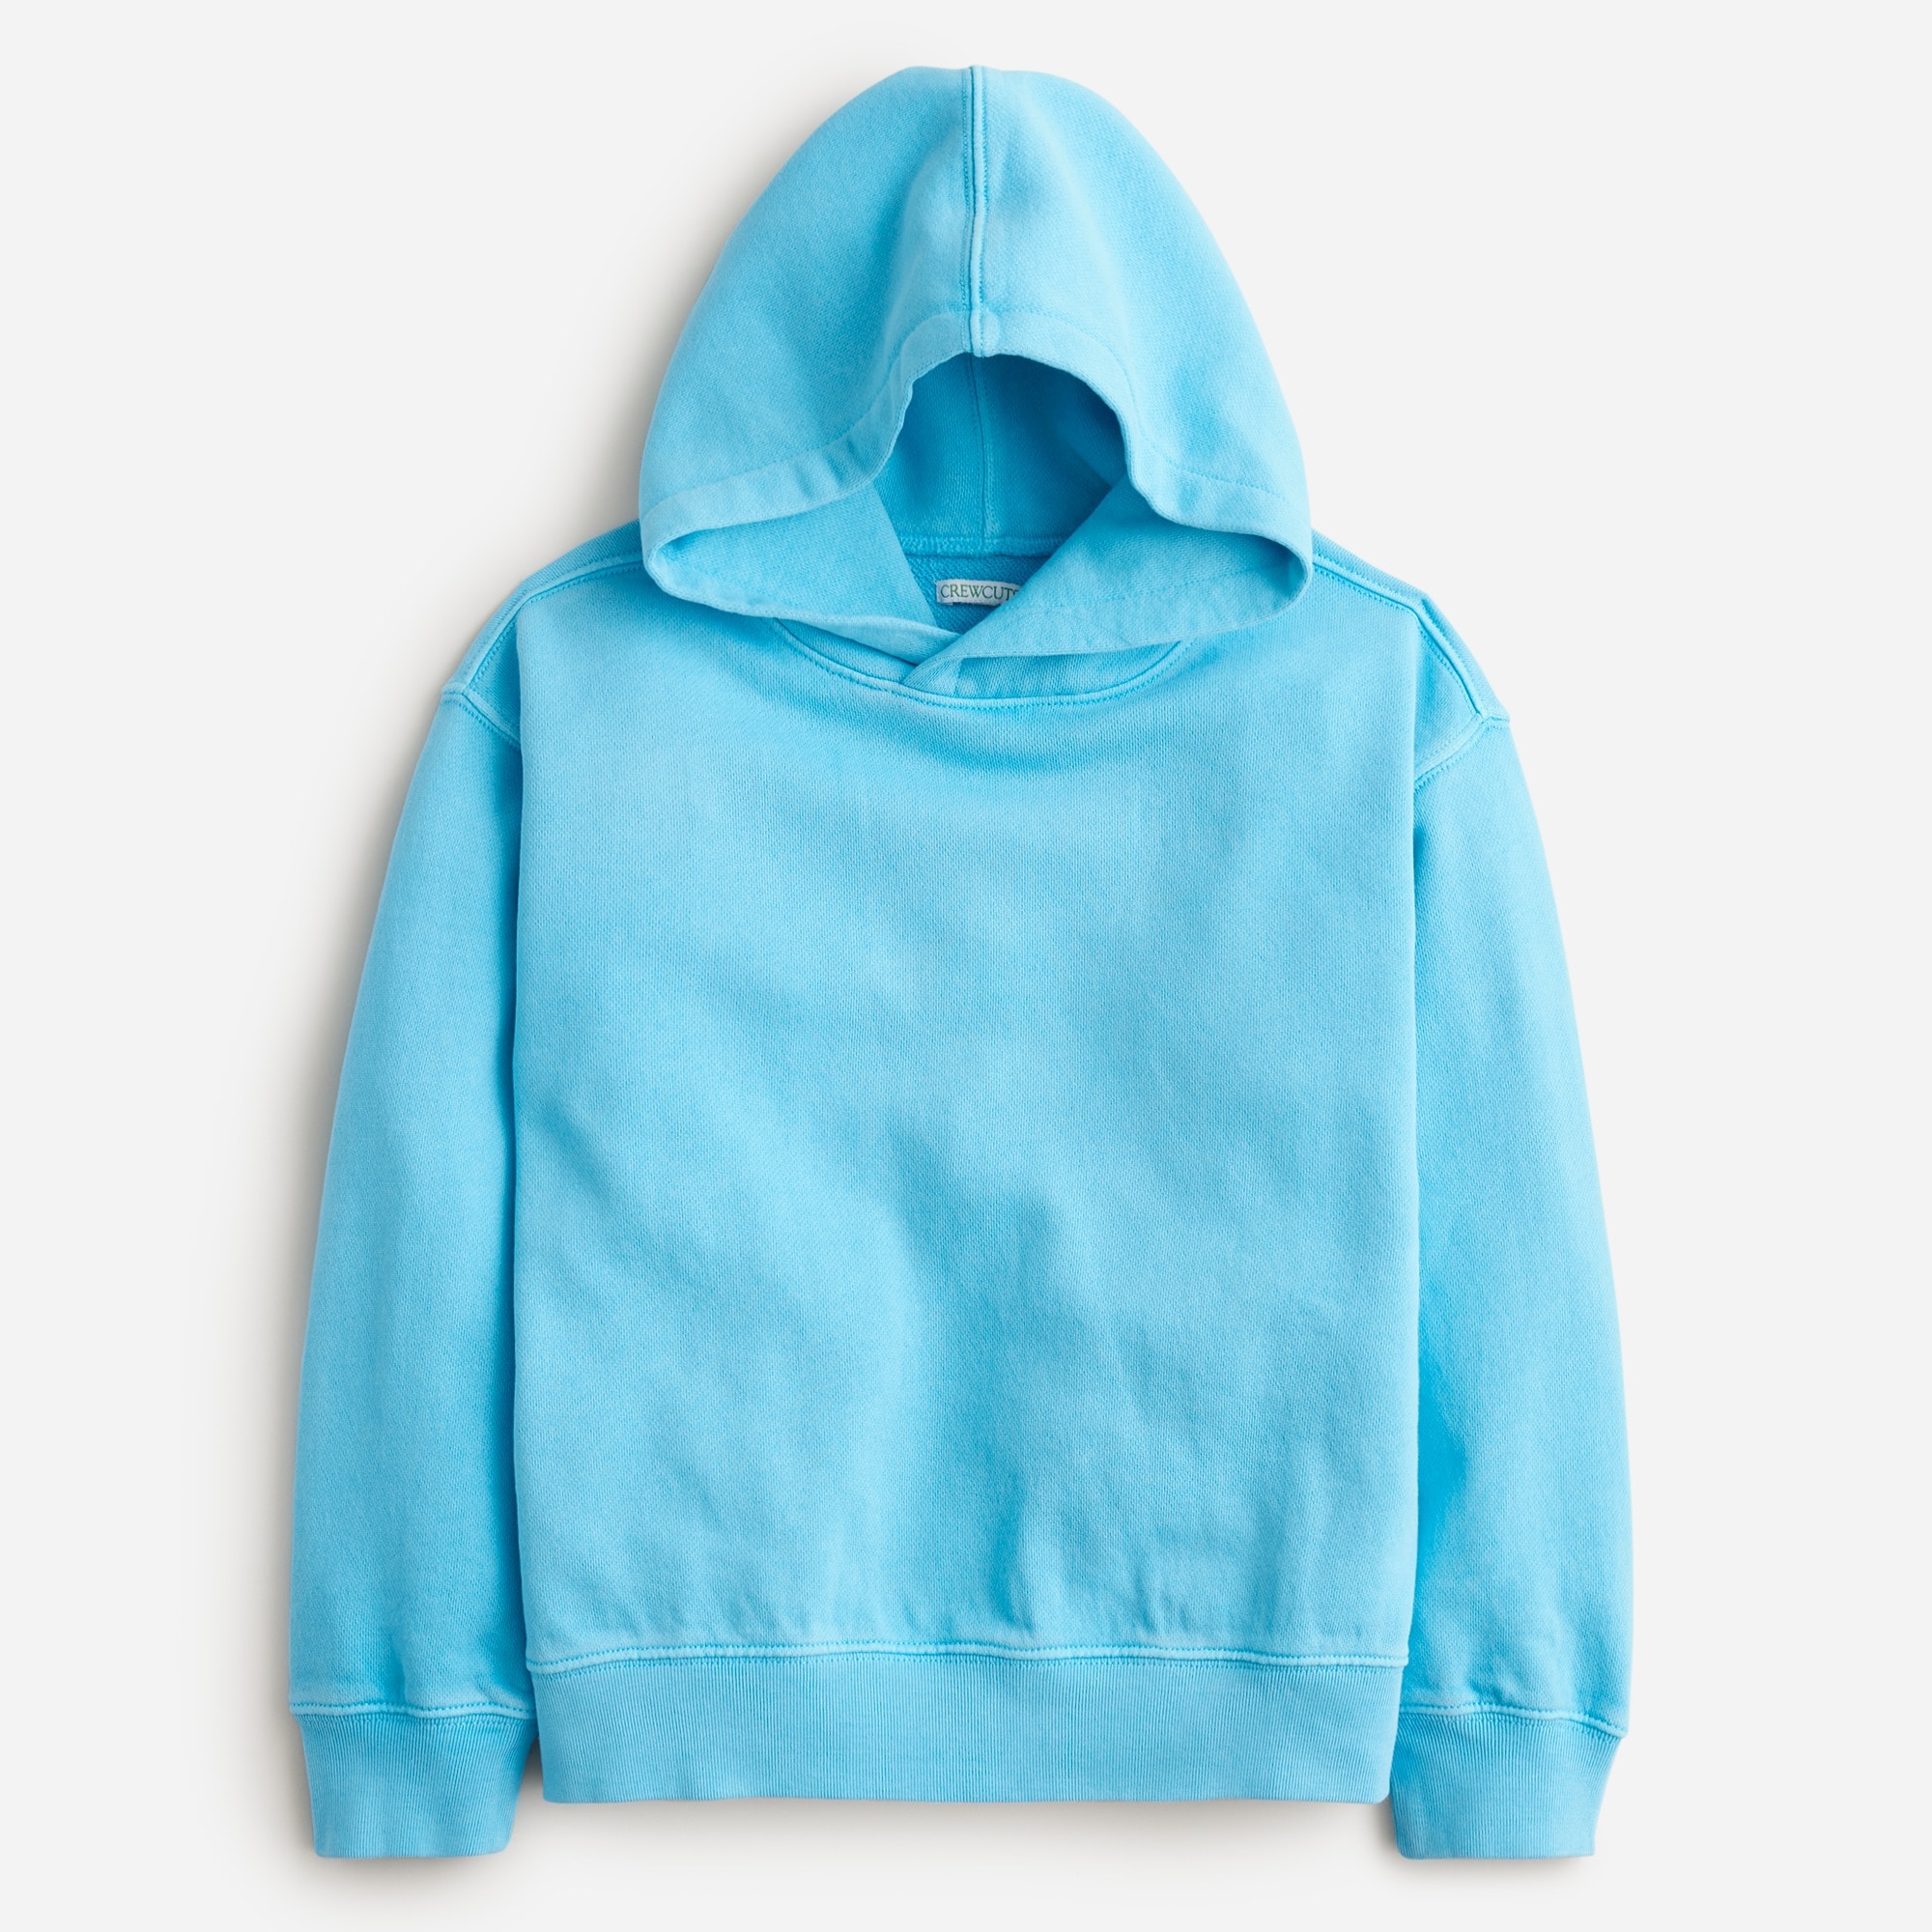  KID by Crewcuts garment-dyed hoodie